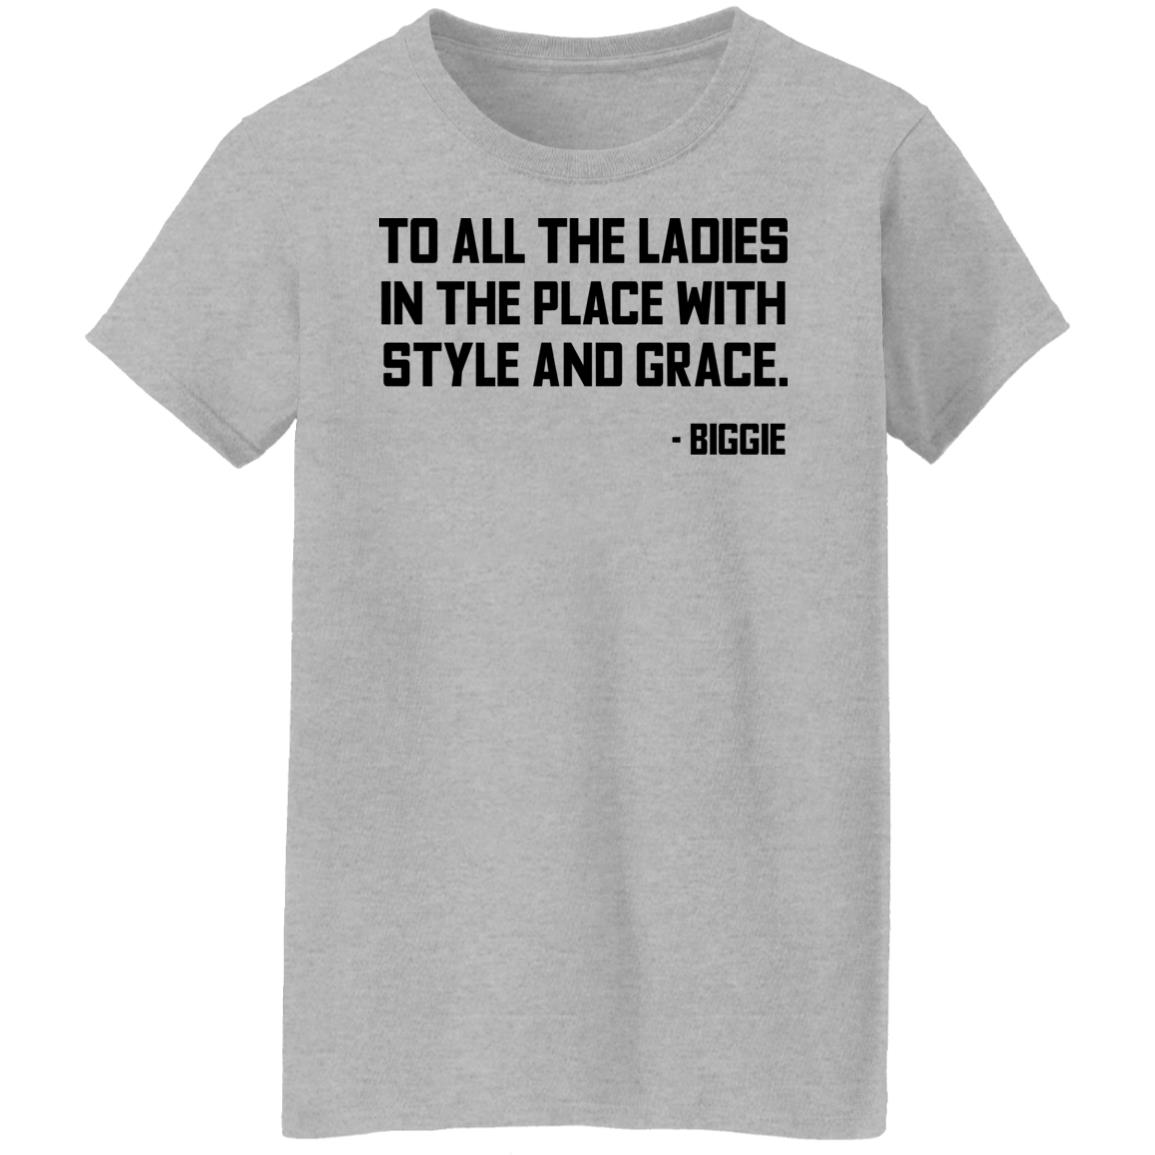 G500L Ladies' 5.3 oz. T-Shirt